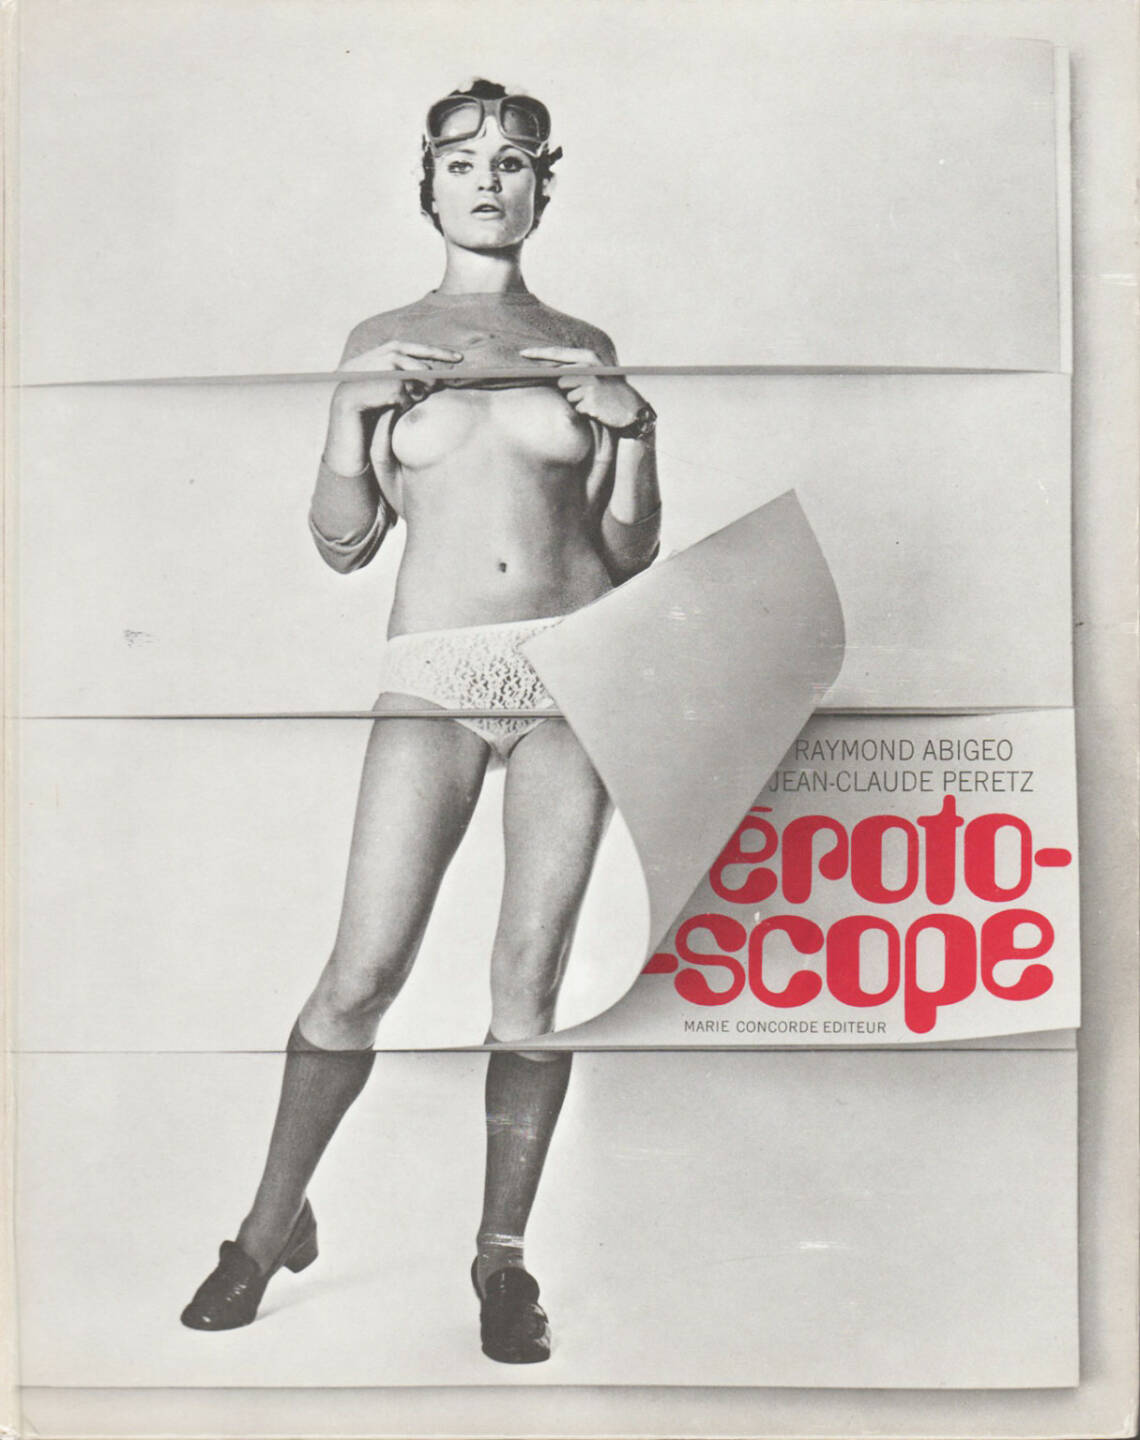 Jean-Claude Peretz & Raymond Abigeo - Erotoscope, Marie Concorde Editeur 1970, Cover - http://josefchladek.com/book/jean-claude_peretz_raymond_abigeo_-_erotoscope